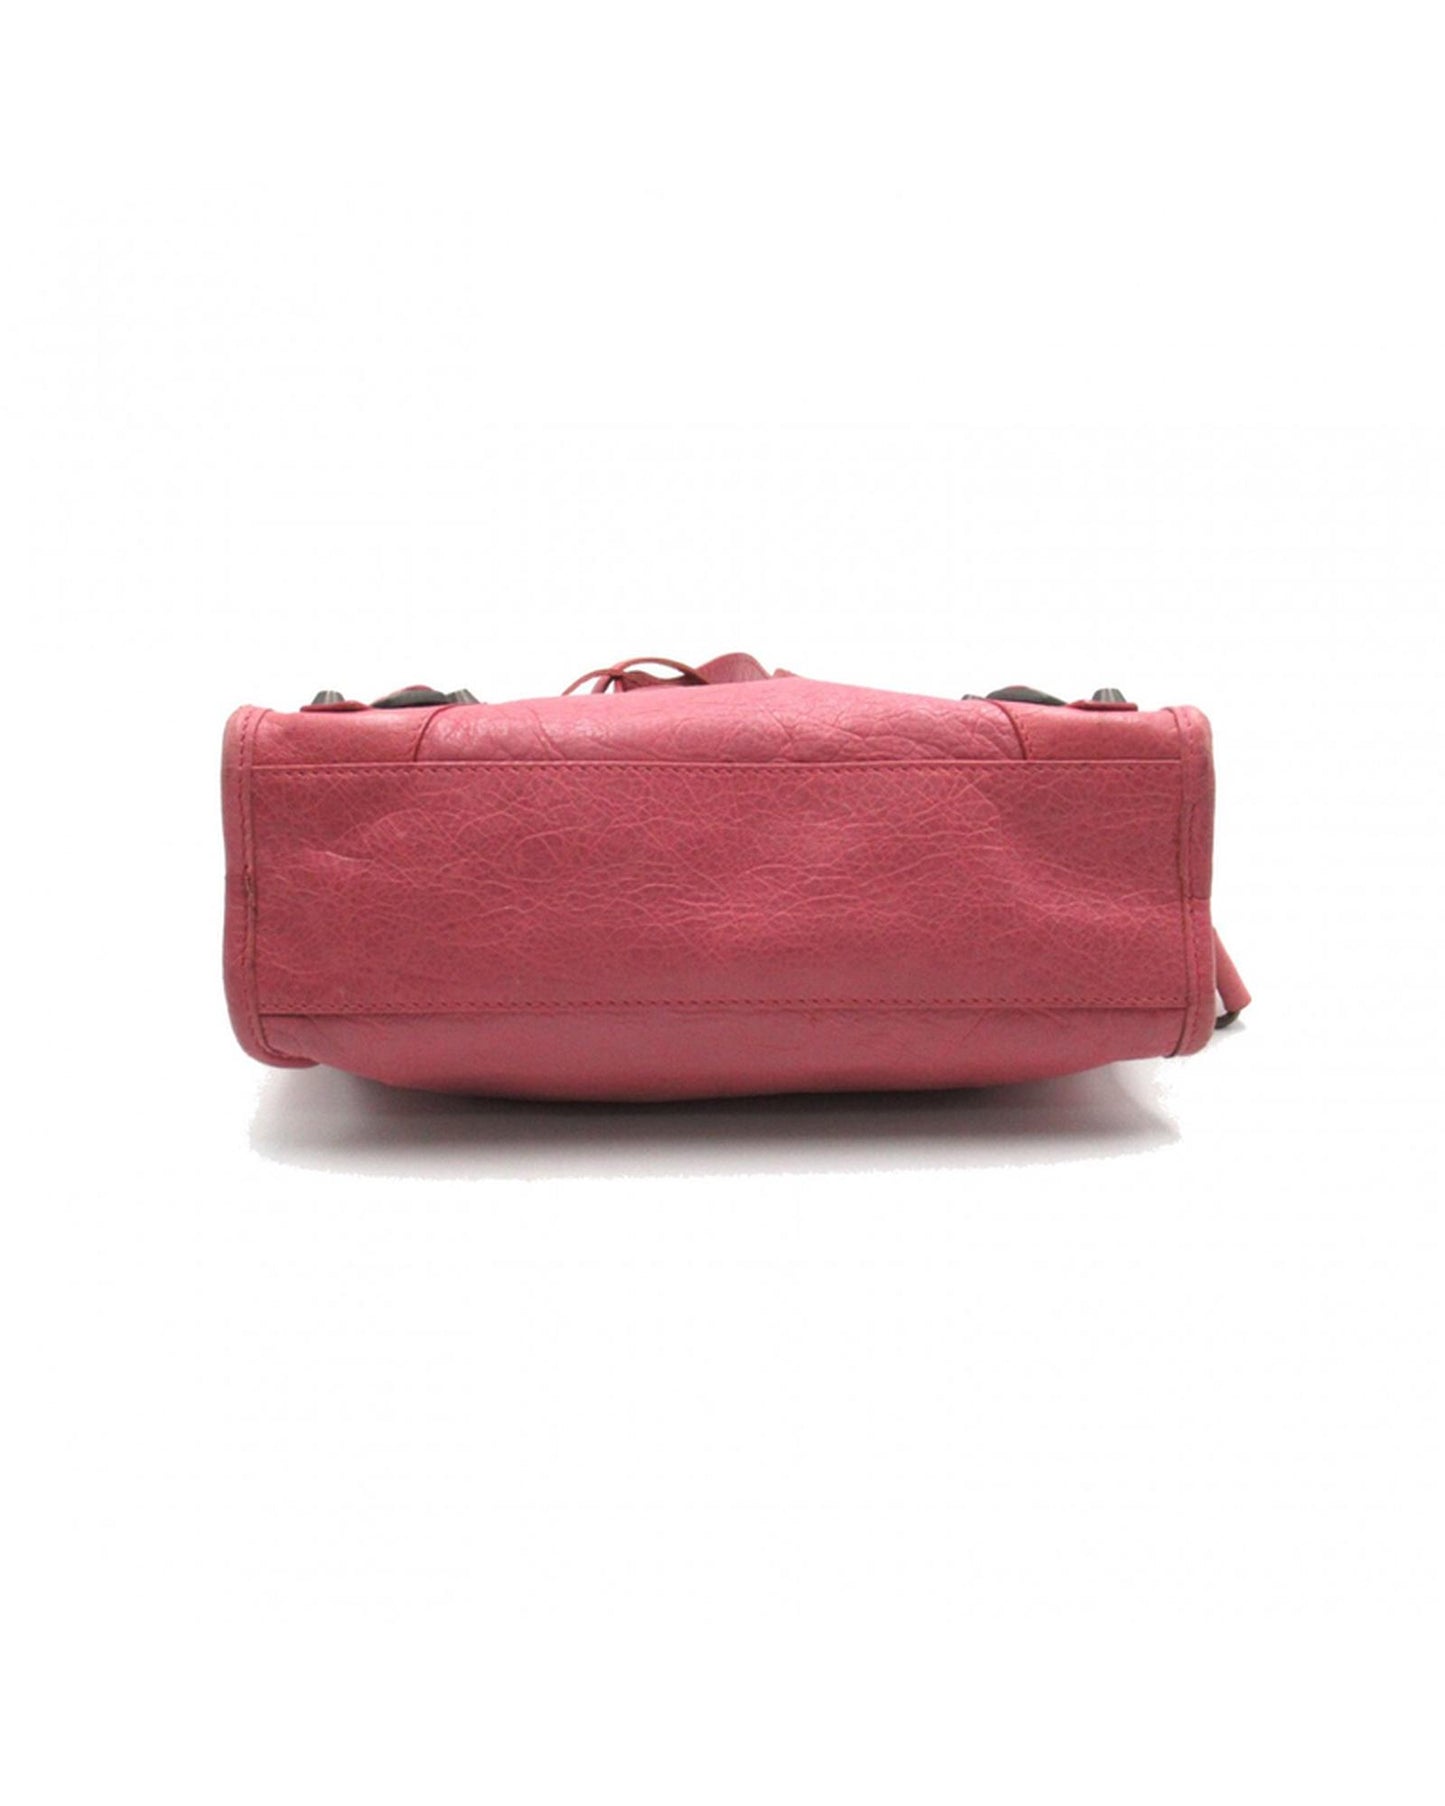 Balenciaga Women's Classic Leather Mini City Bag in Pink